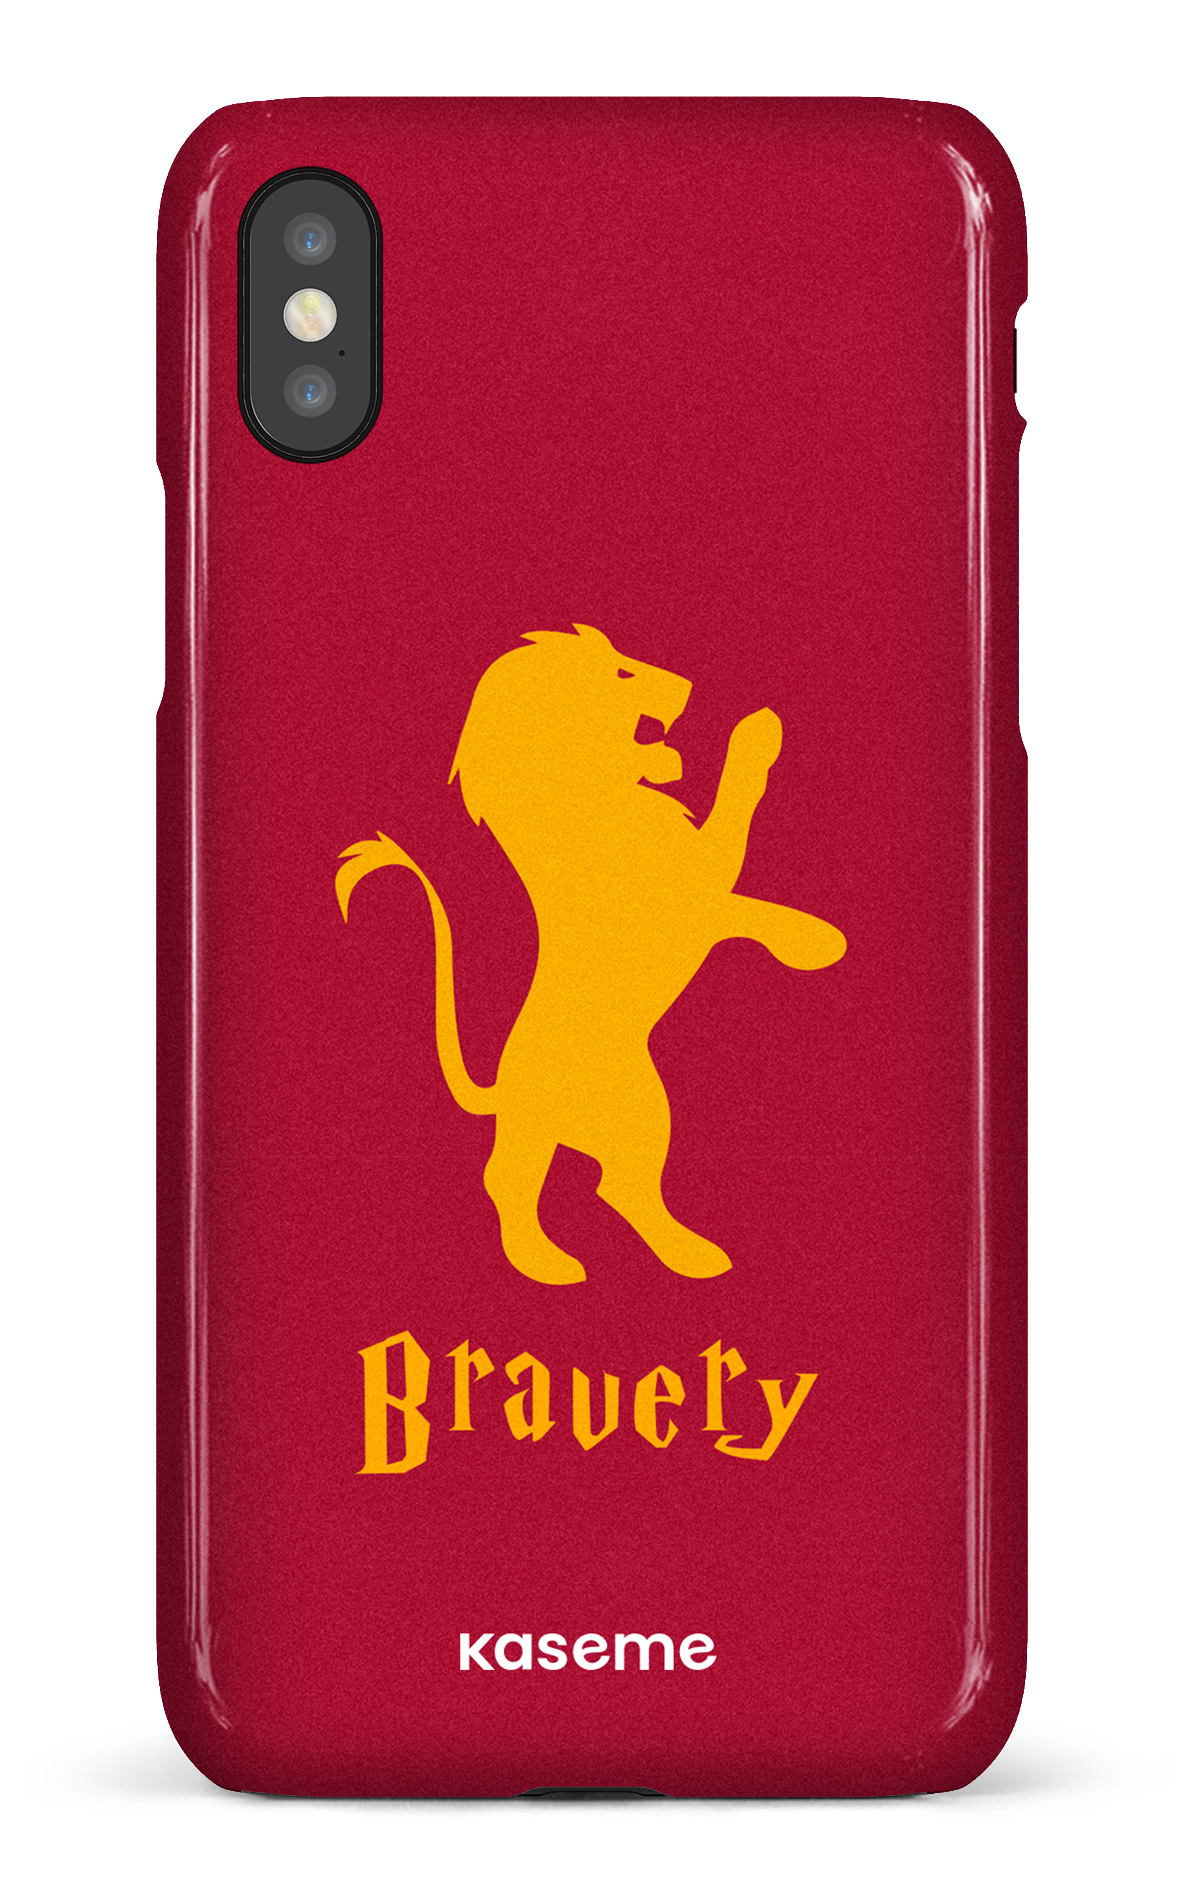 Bravery - iPhone X/XS